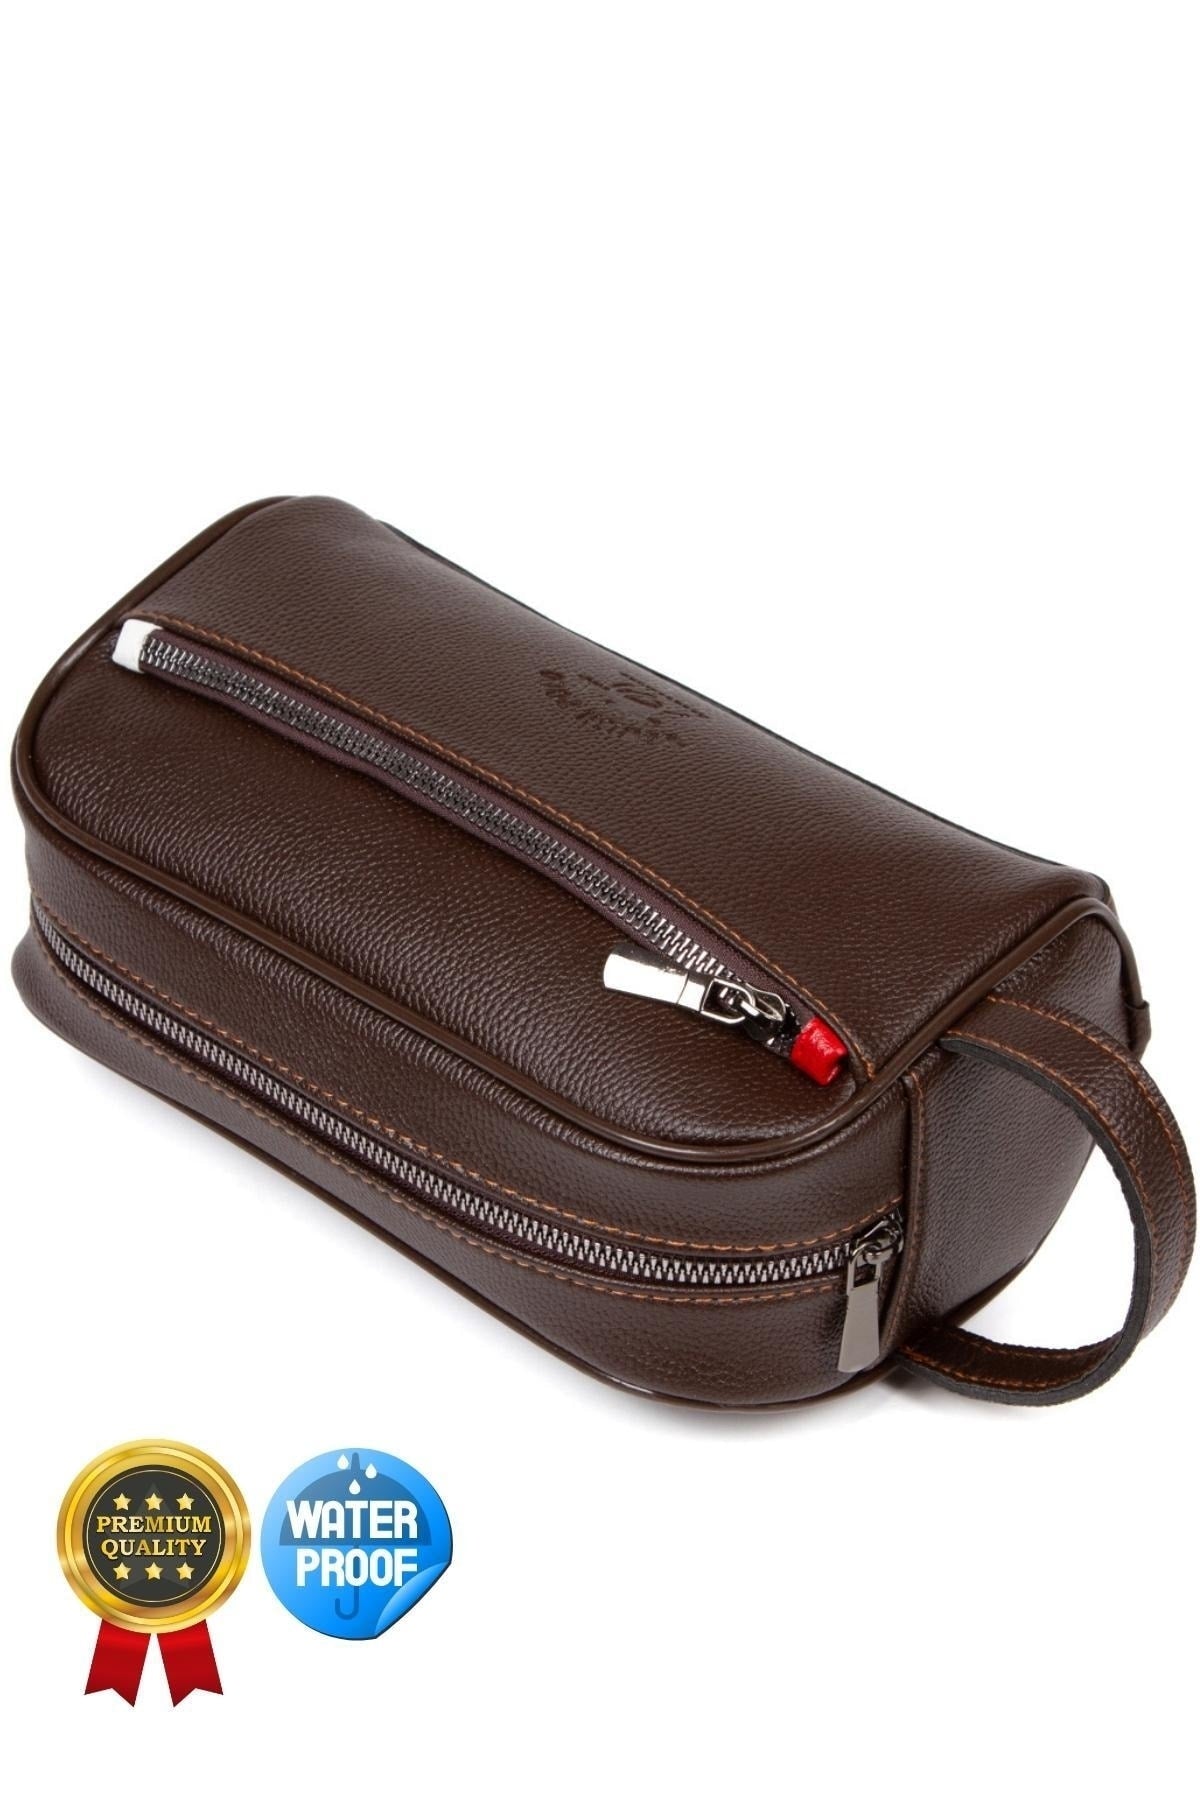 Adelina Men's Leather Portfolio Clutch Bag Travel Shaving Cosmetic Clutch Bag Dark Brown